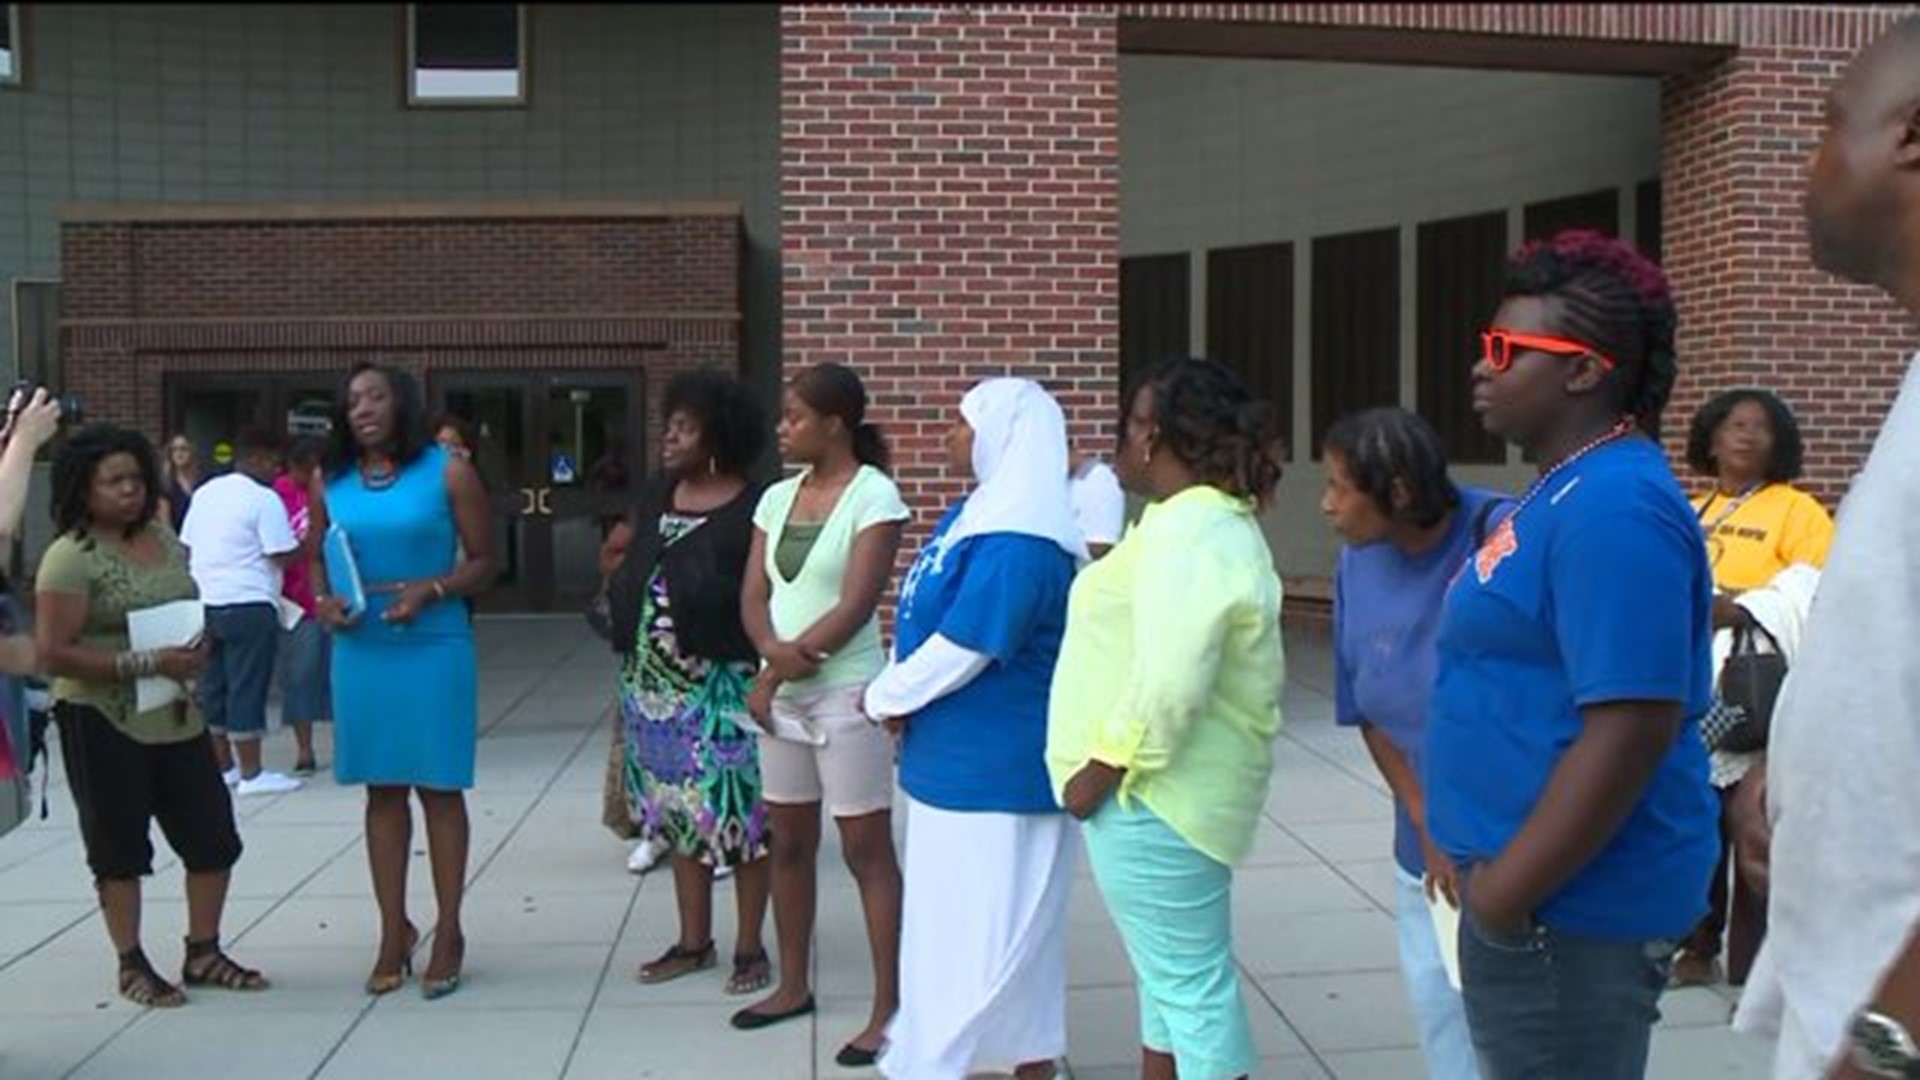 Norwalk Board of Education Members Face Allegations of Racism